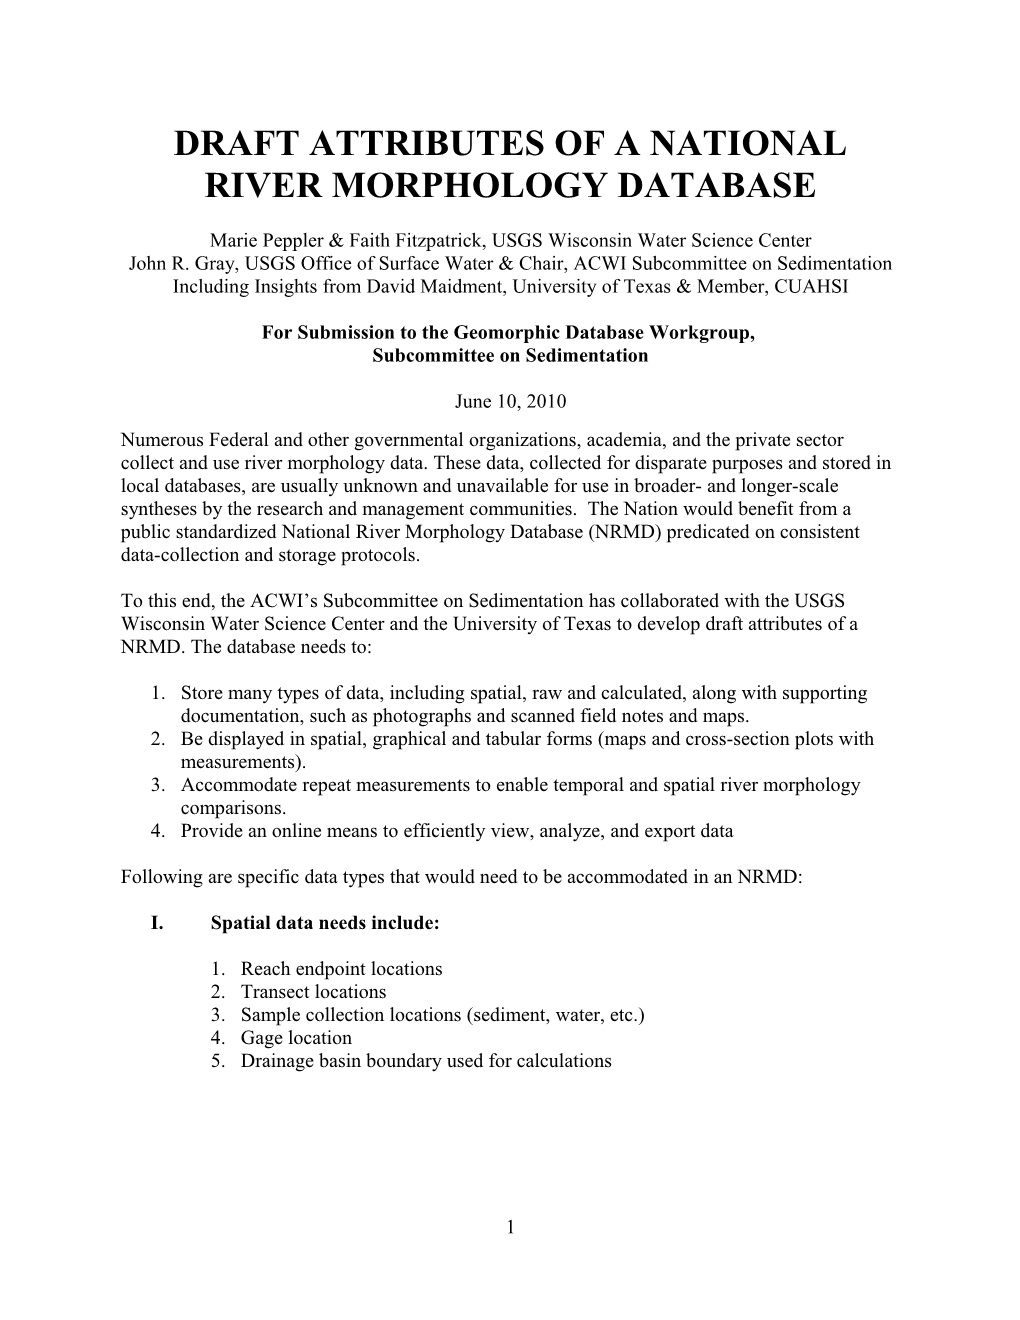 Draft Attributes of a National River Morphology Database